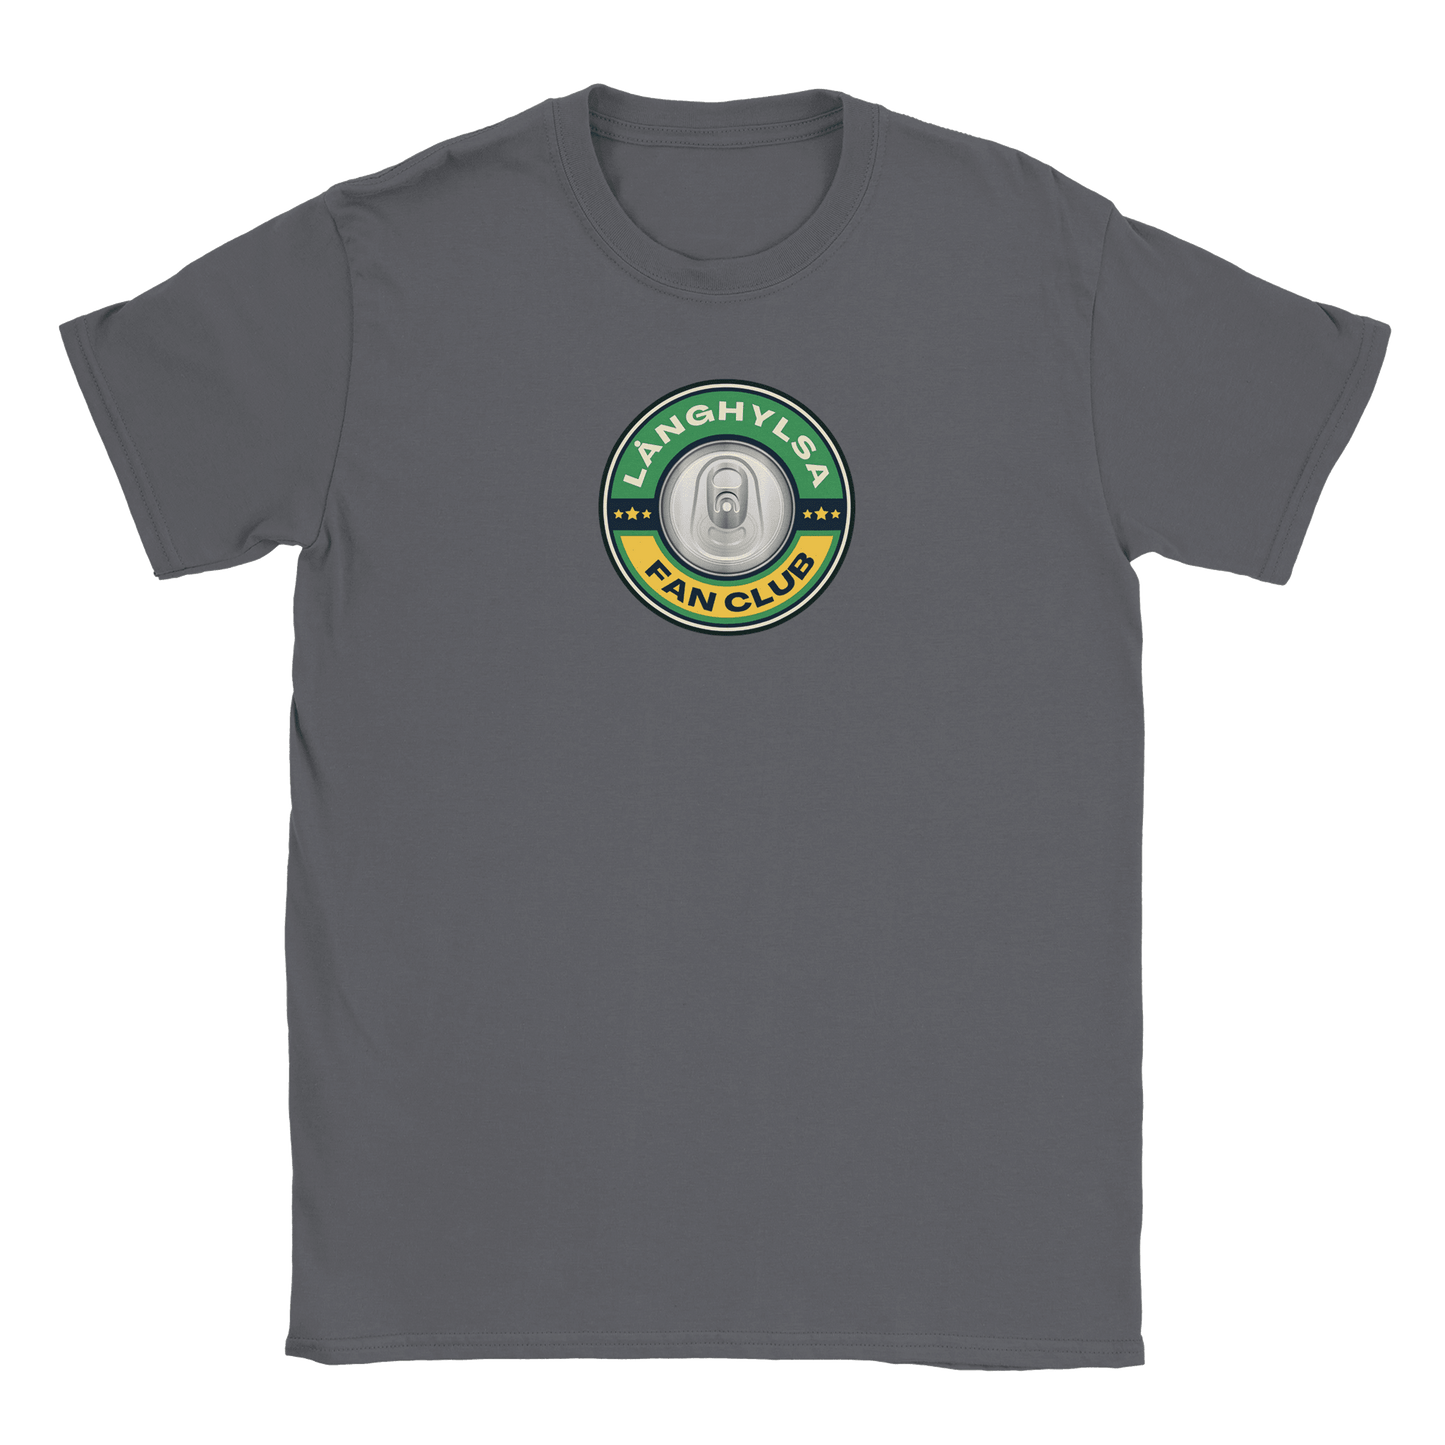 Långhylsa Fan Club - T-shirt Charcoal